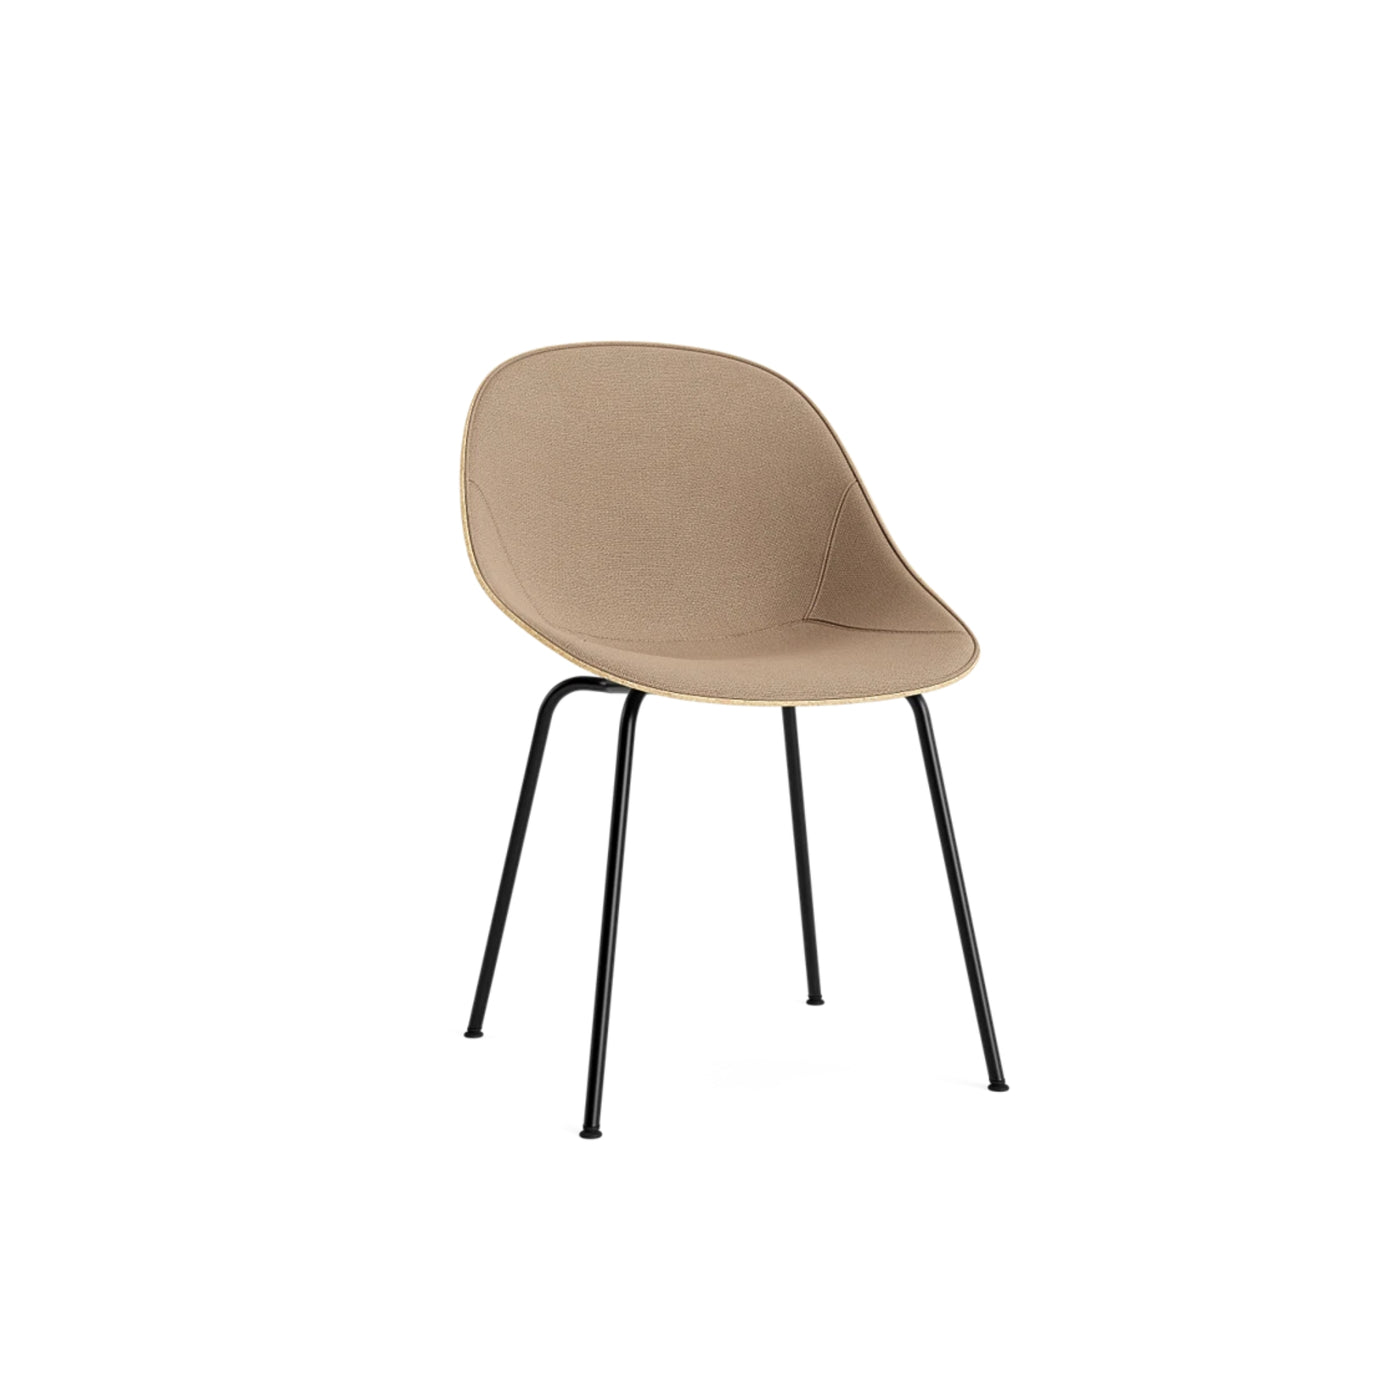 Normann Copenhagen Mat Chair at someday designs. #colour_hallingdal-224